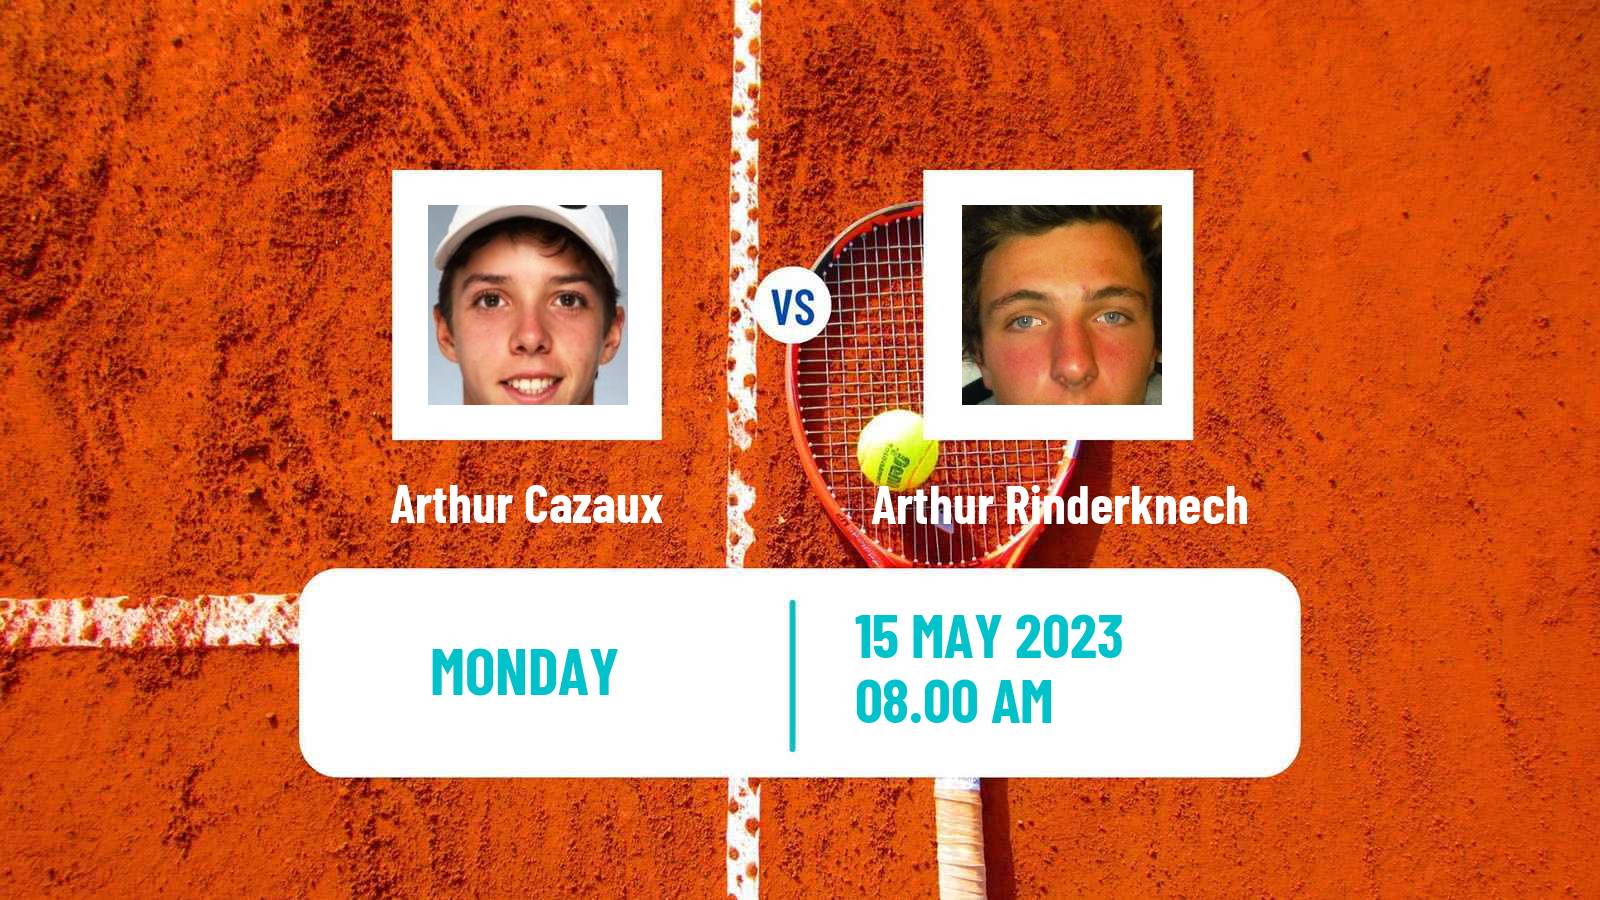 Tennis ATP Challenger Arthur Cazaux - Arthur Rinderknech